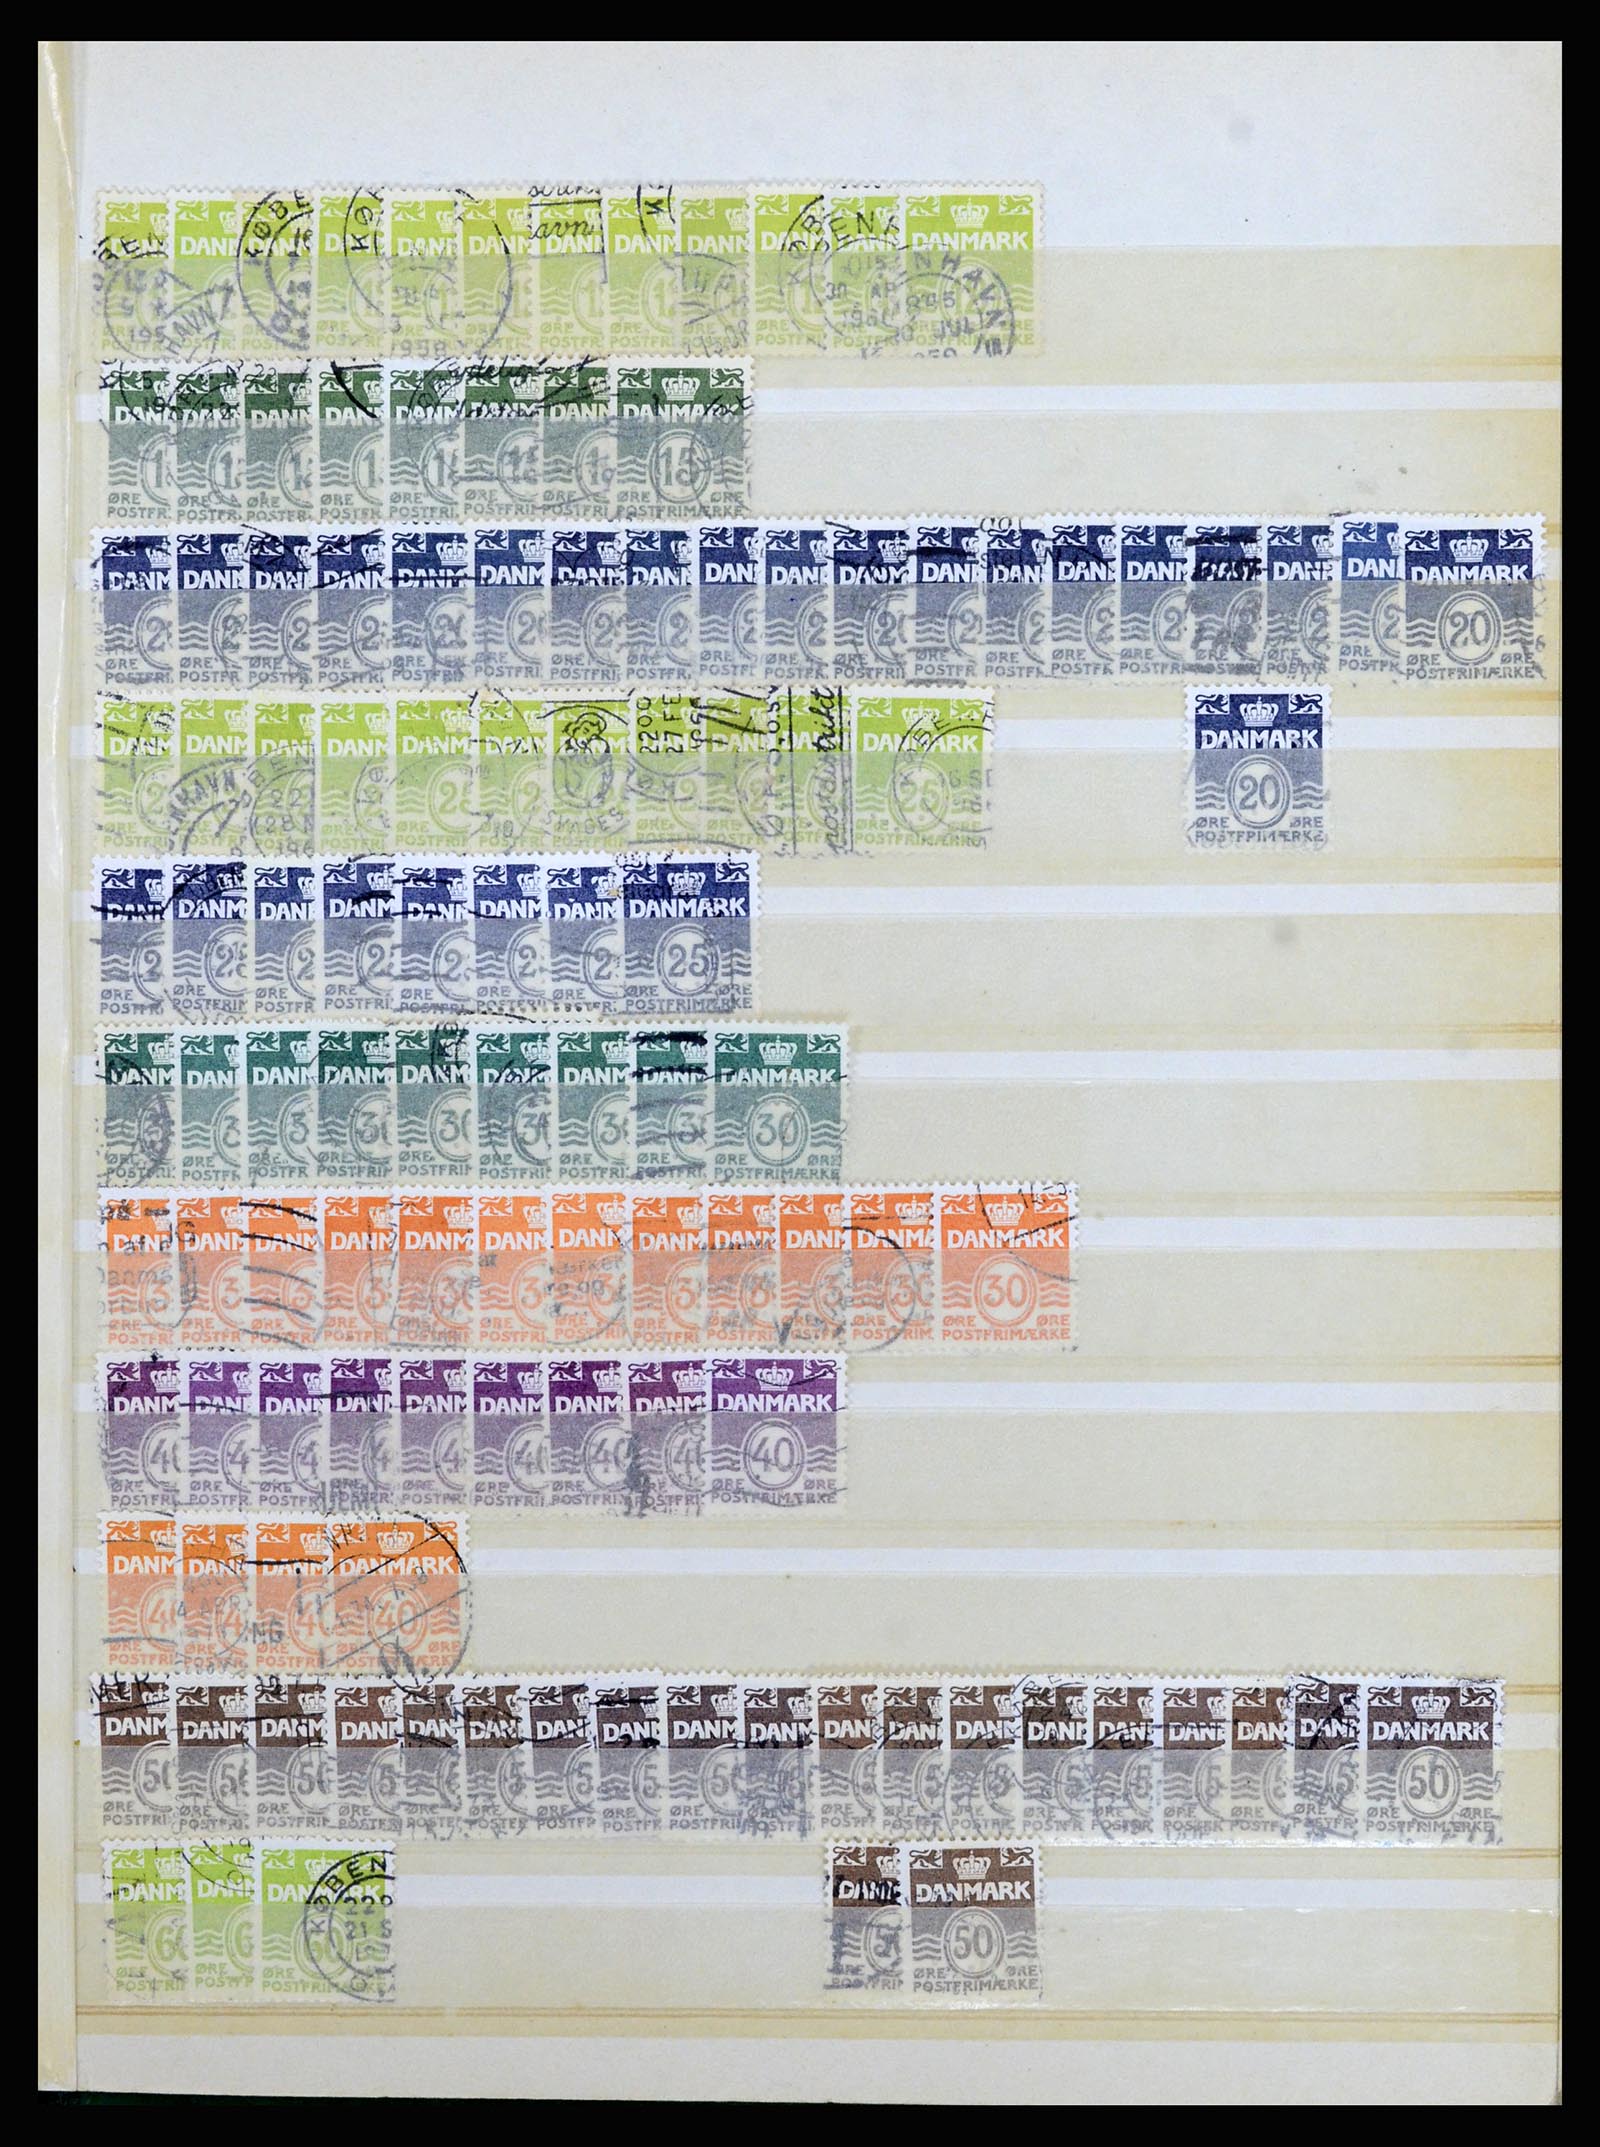 37056 030 - Stamp collection 37056 Denmark perfins.